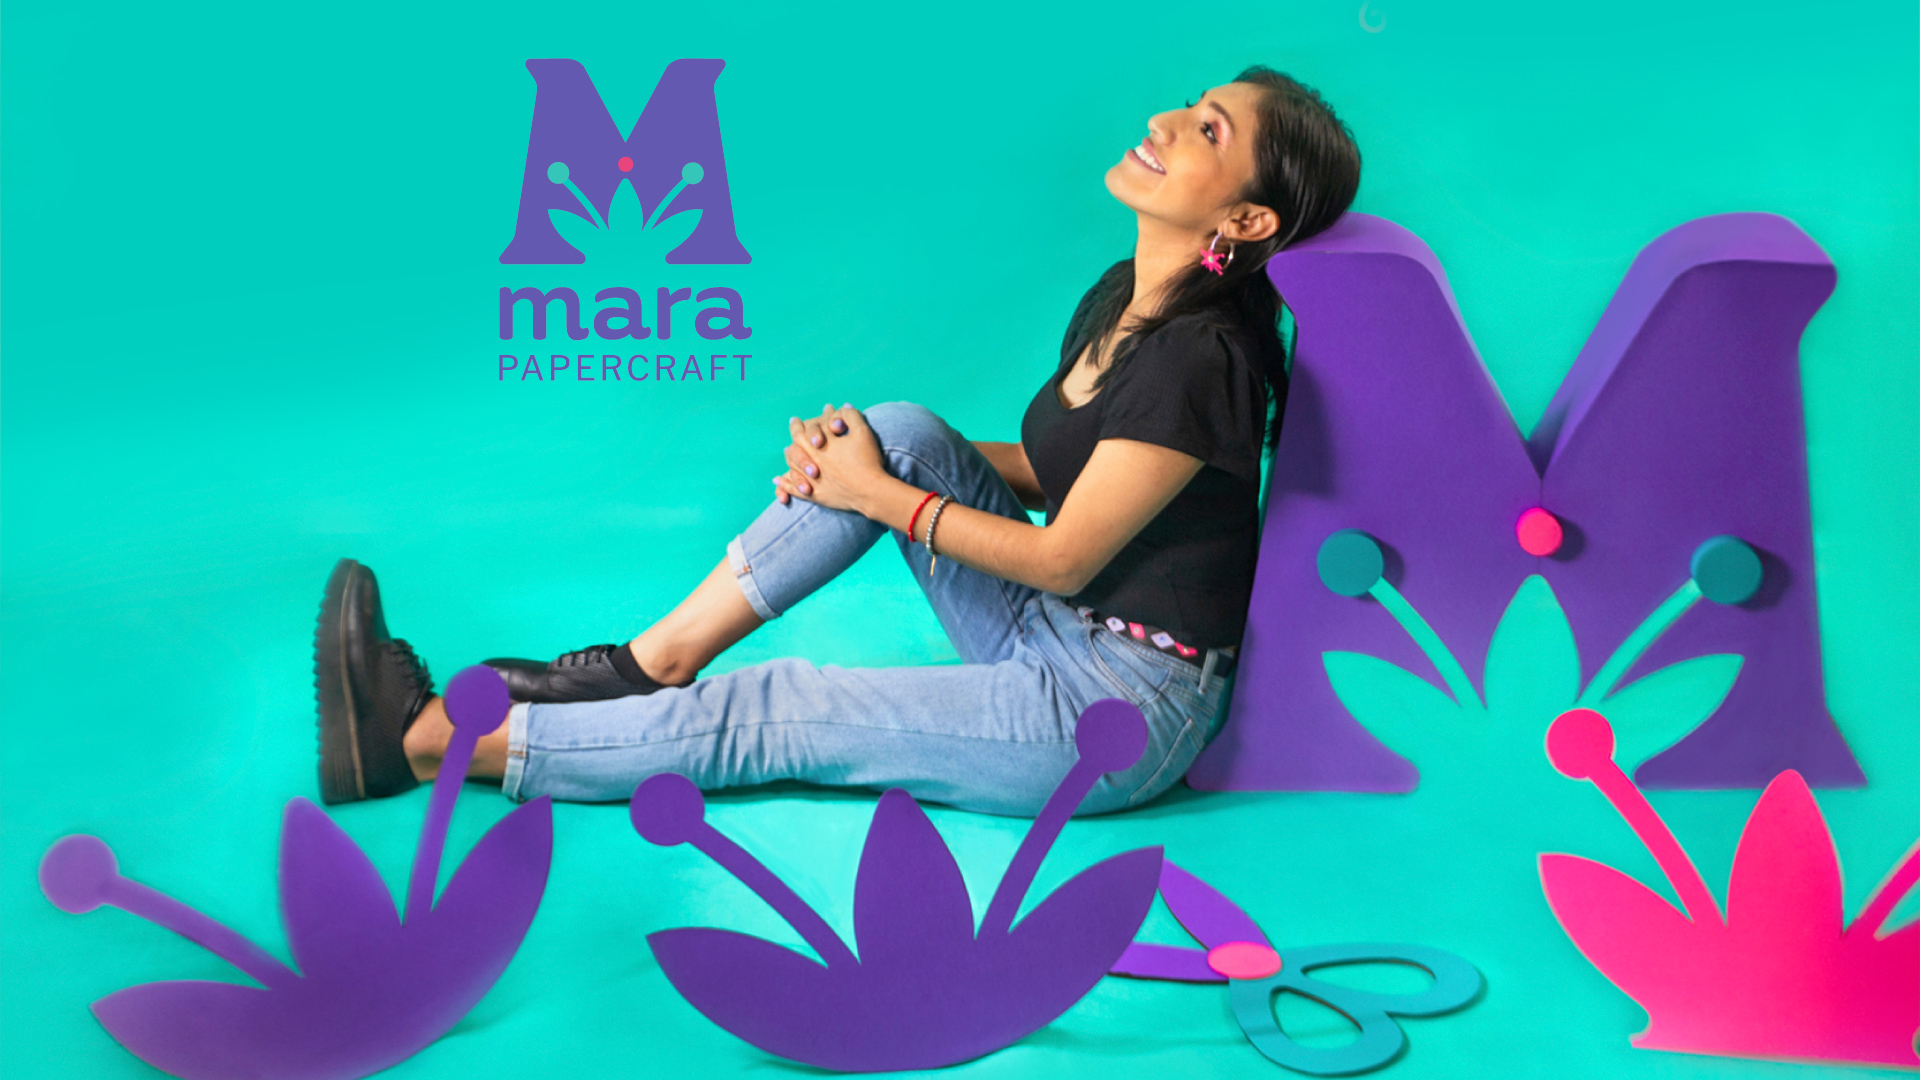 Mara Papercraft, marca personal by Mafer Benavente Huicho - Creative Work